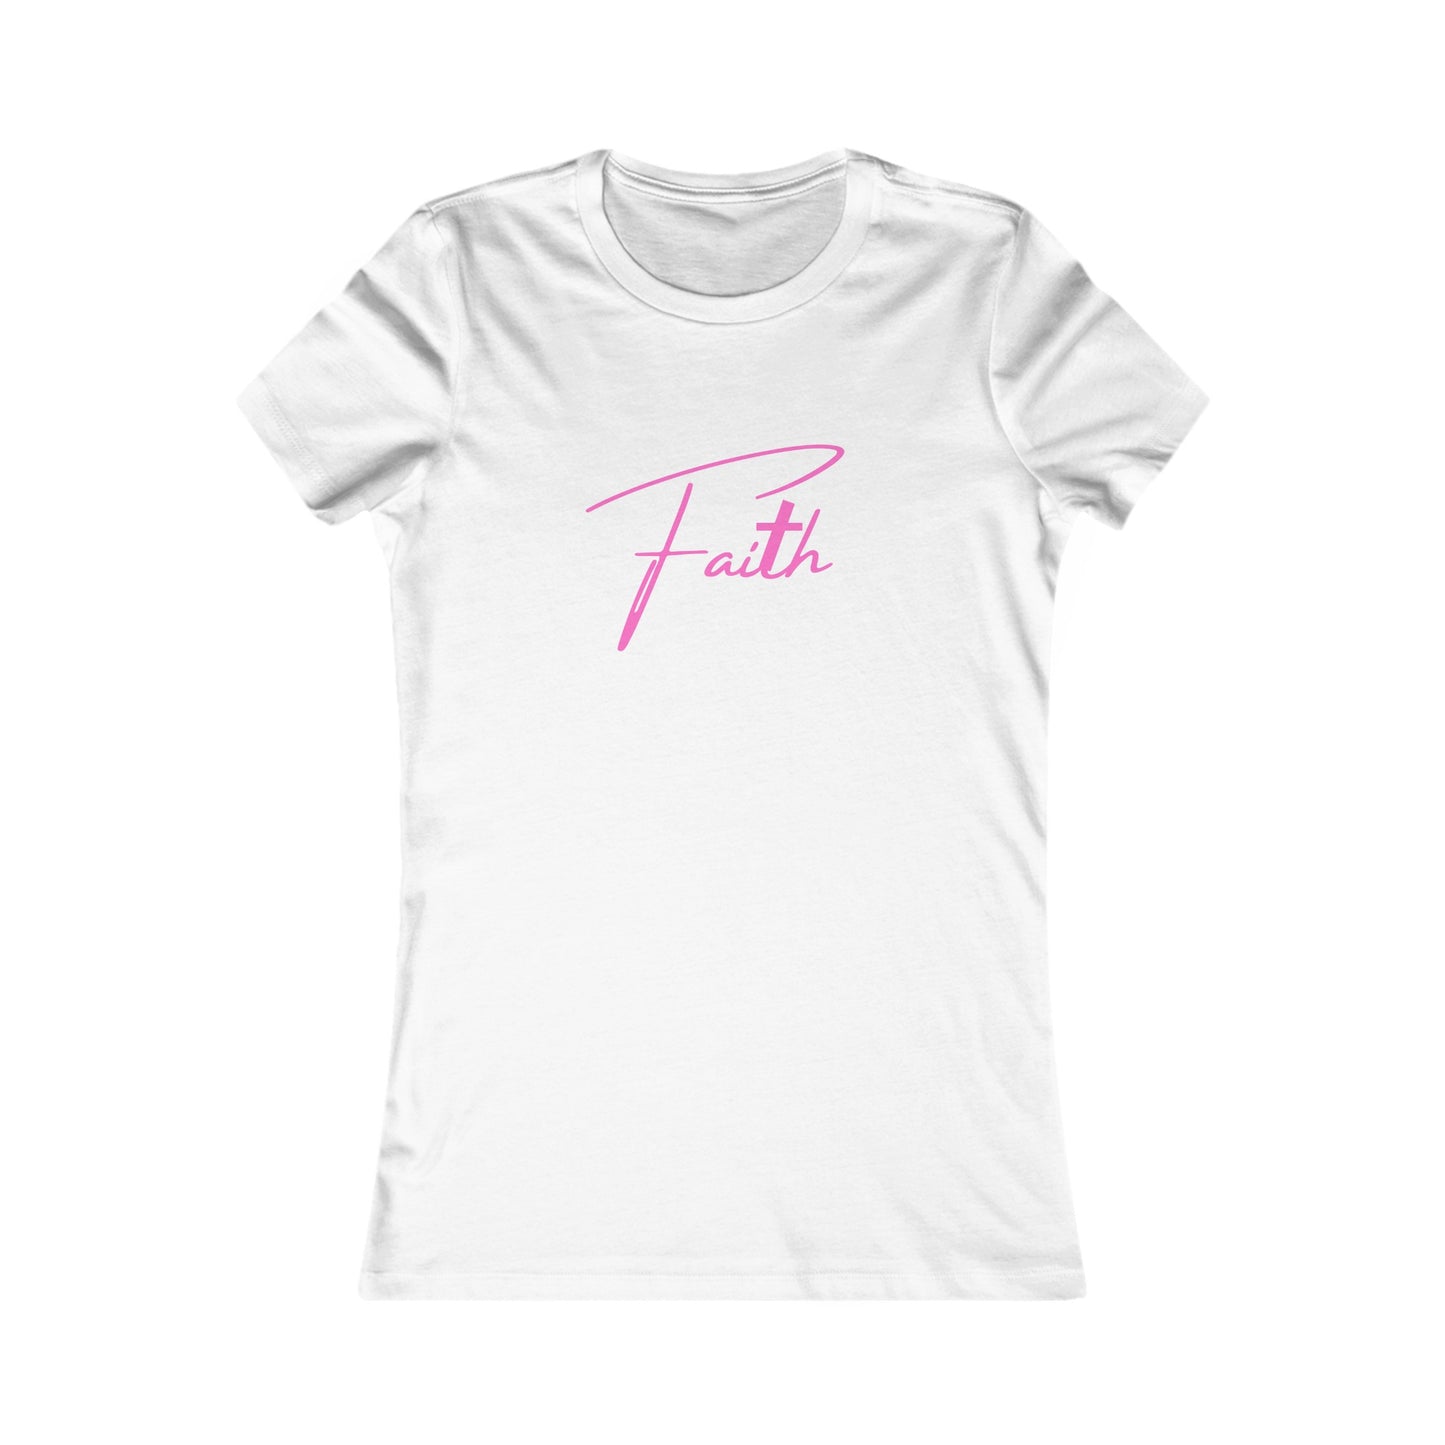 Cross-ed T Faith Women's Fitted Tshirt (Hot Pink Logo)